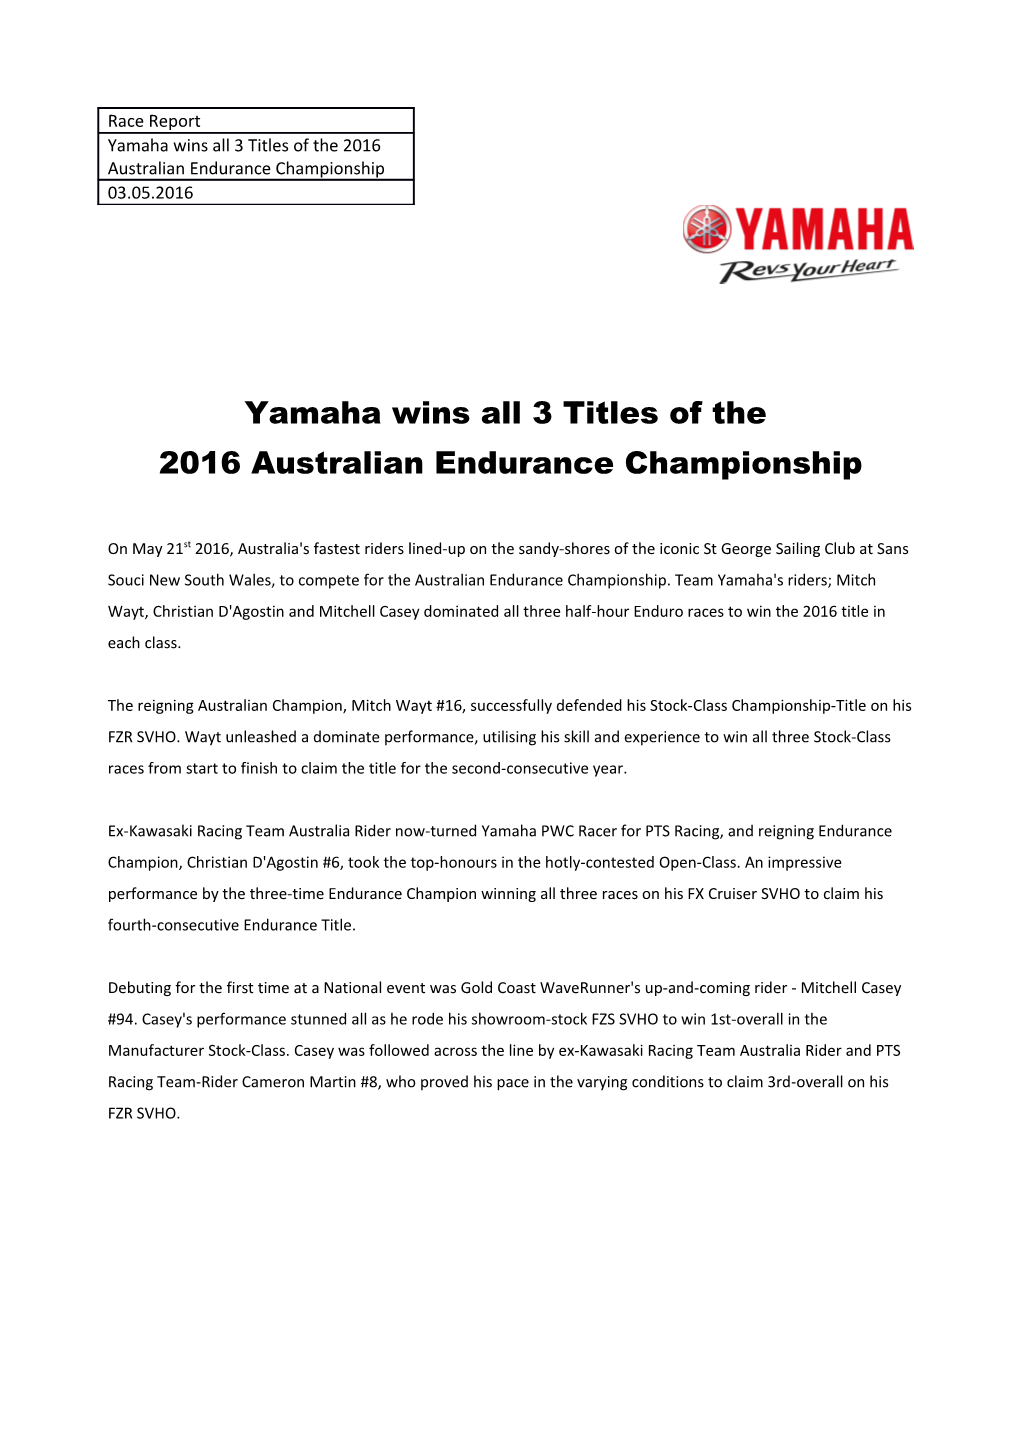 Yamaha Wins All 3 Titles of the 2016 Australian Endurance Championship